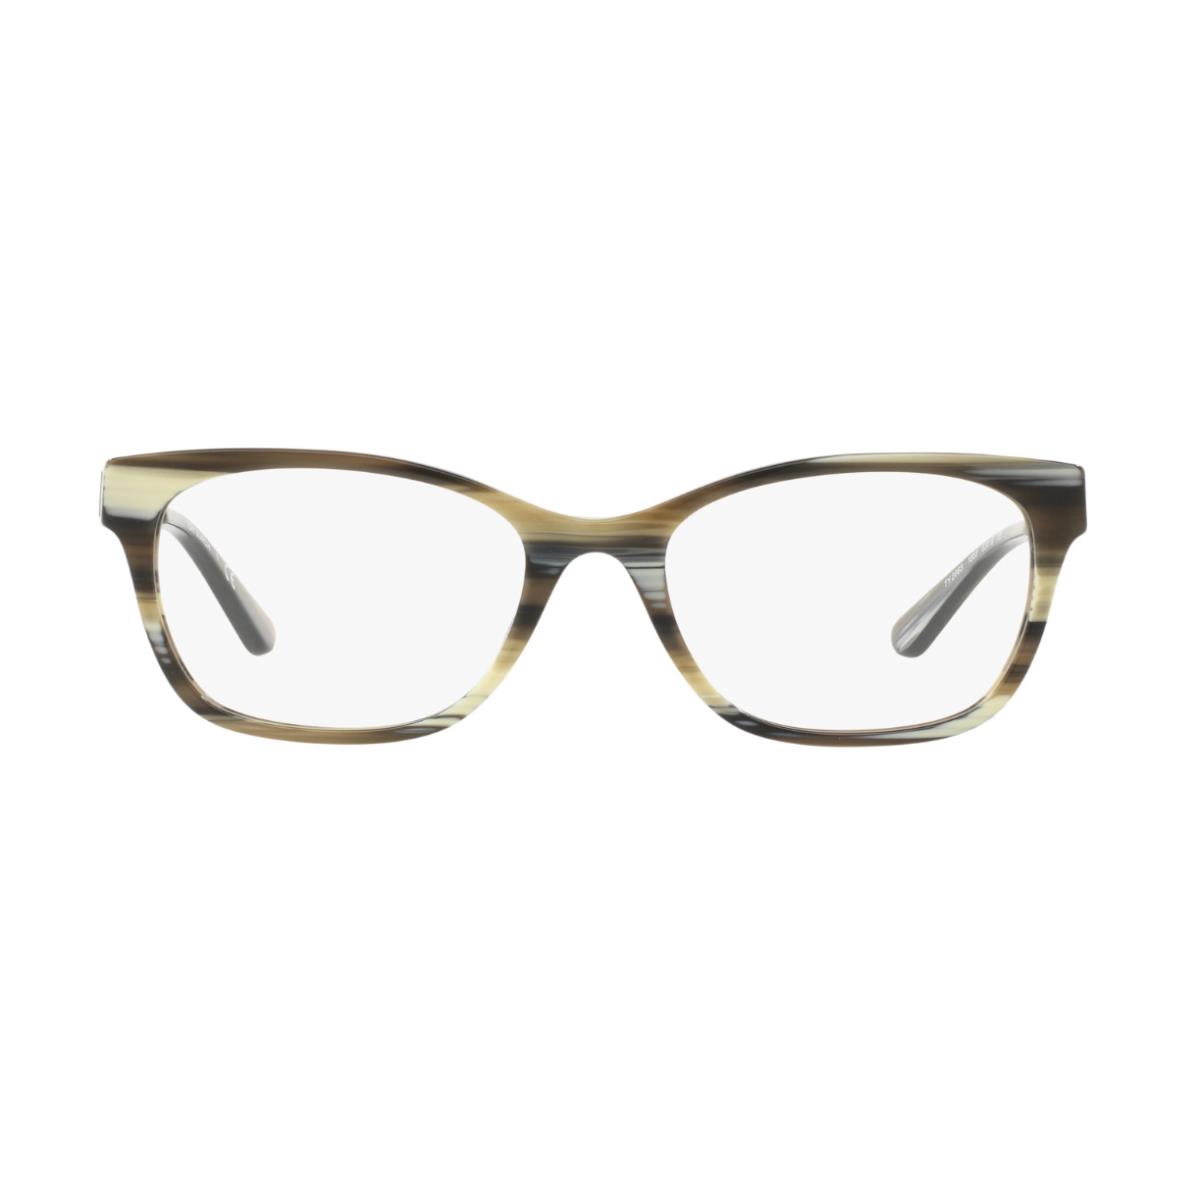 Tory Burch Eyeglasses TY 2063-1553 Olive Horn W/demo Lens 53mm